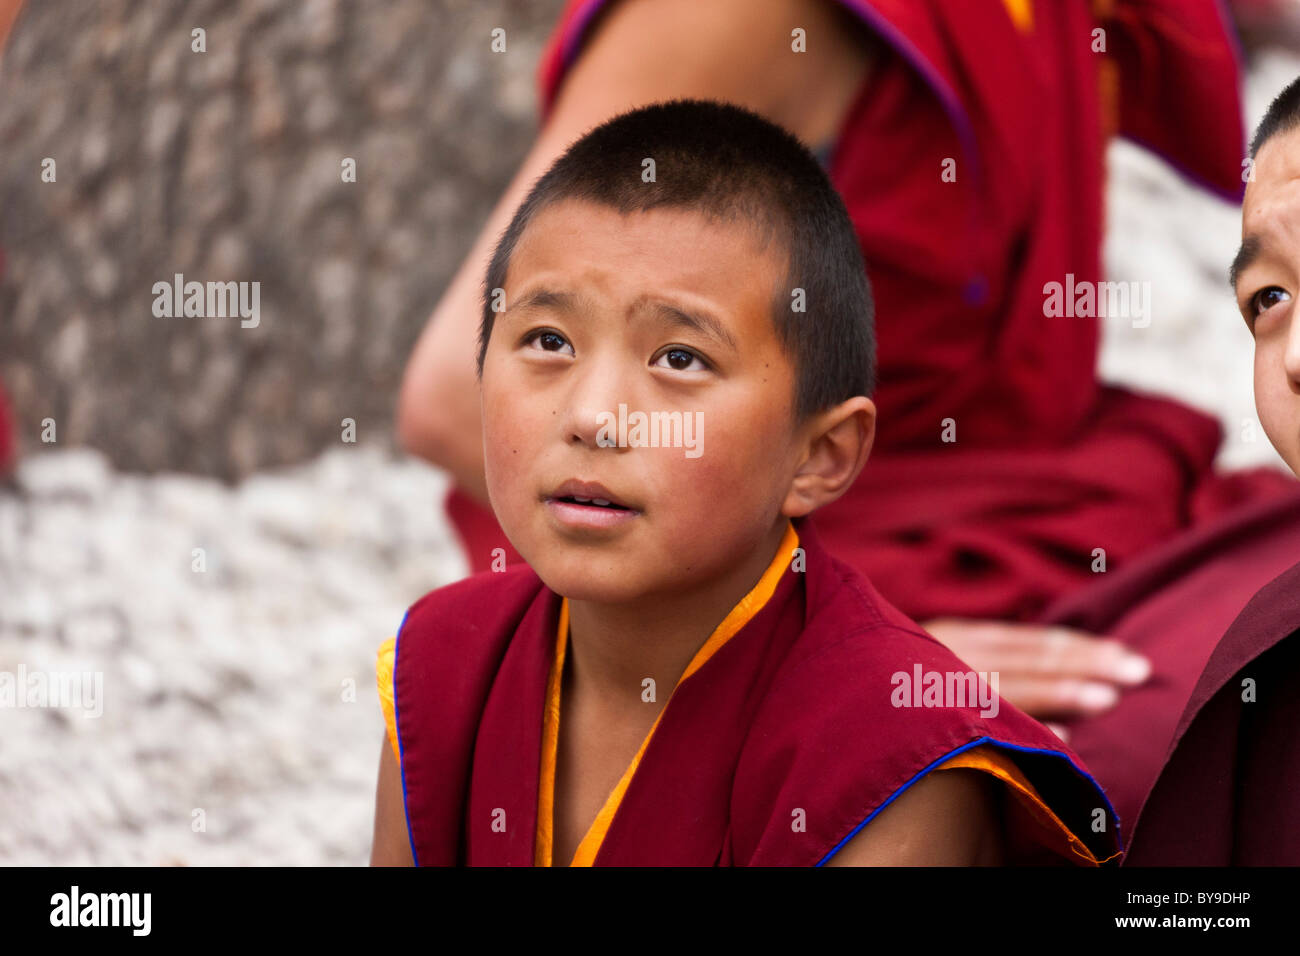 Young boy monk in the Debating Courtyard at Sera Monastery Lhasa Tibet. JMH4609 Stock Photo